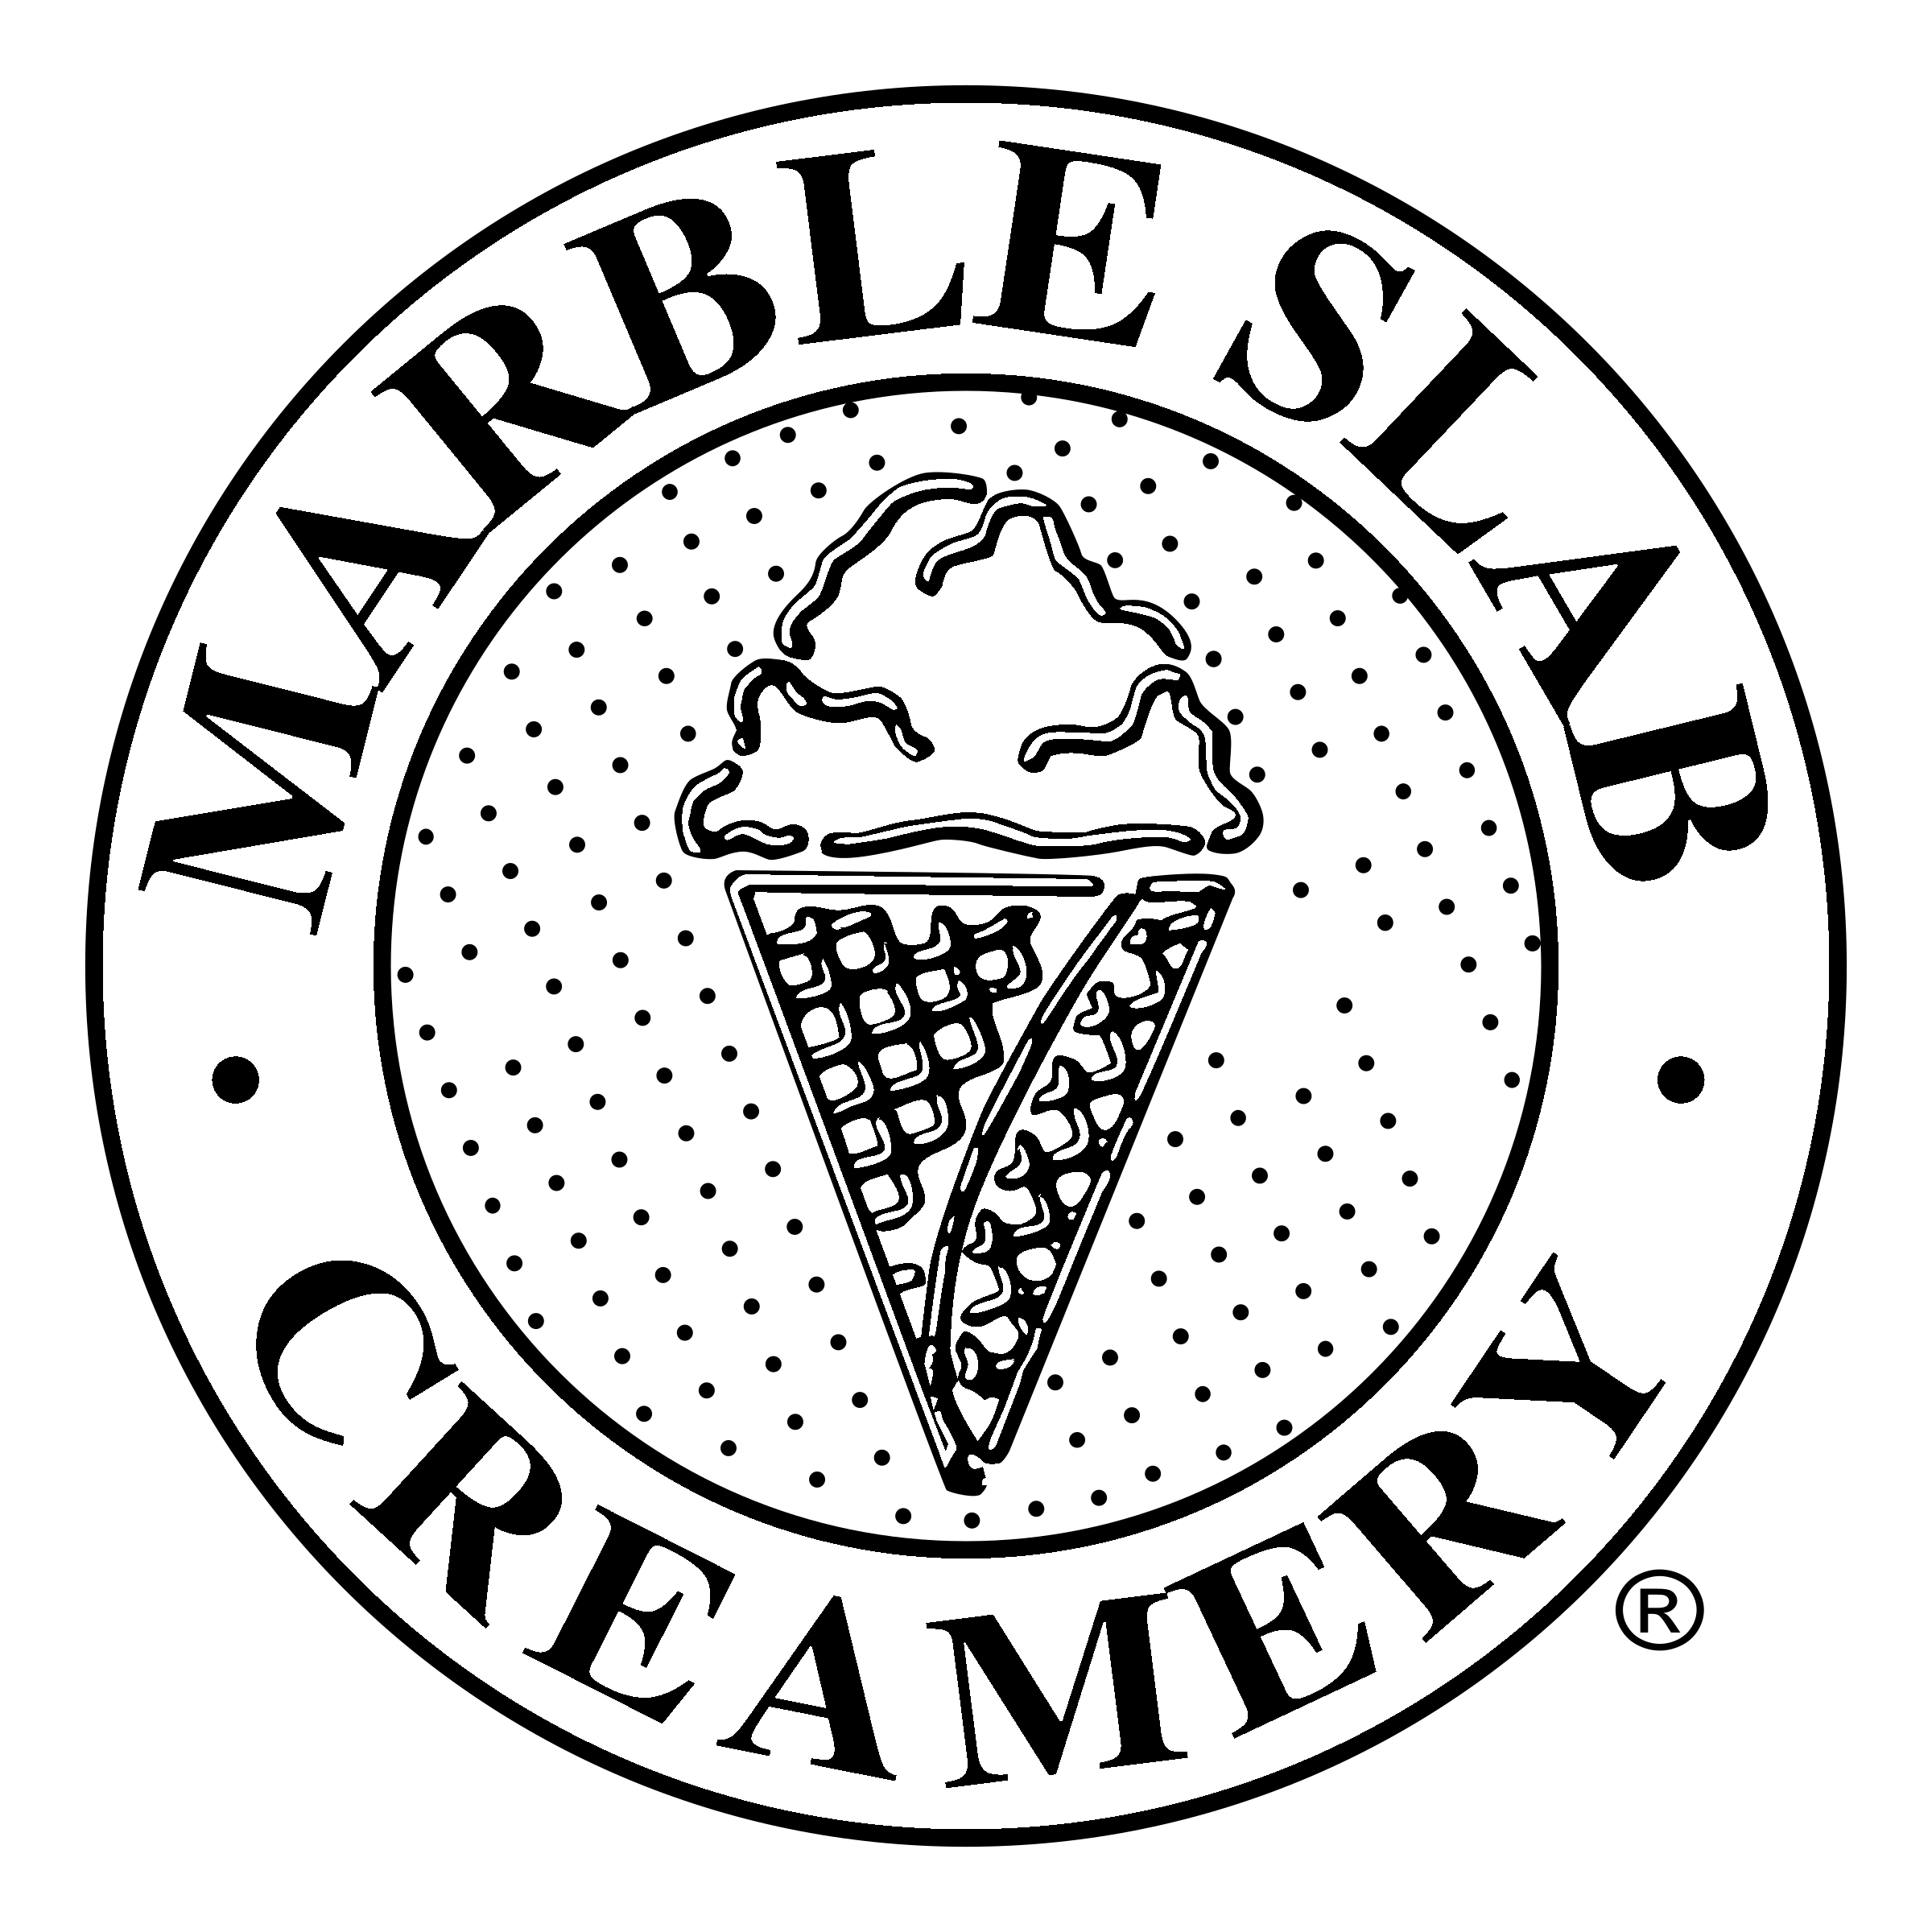 Marble Slab Logo - Marble Slab Creamery Logo PNG Transparent & SVG Vector - Freebie Supply